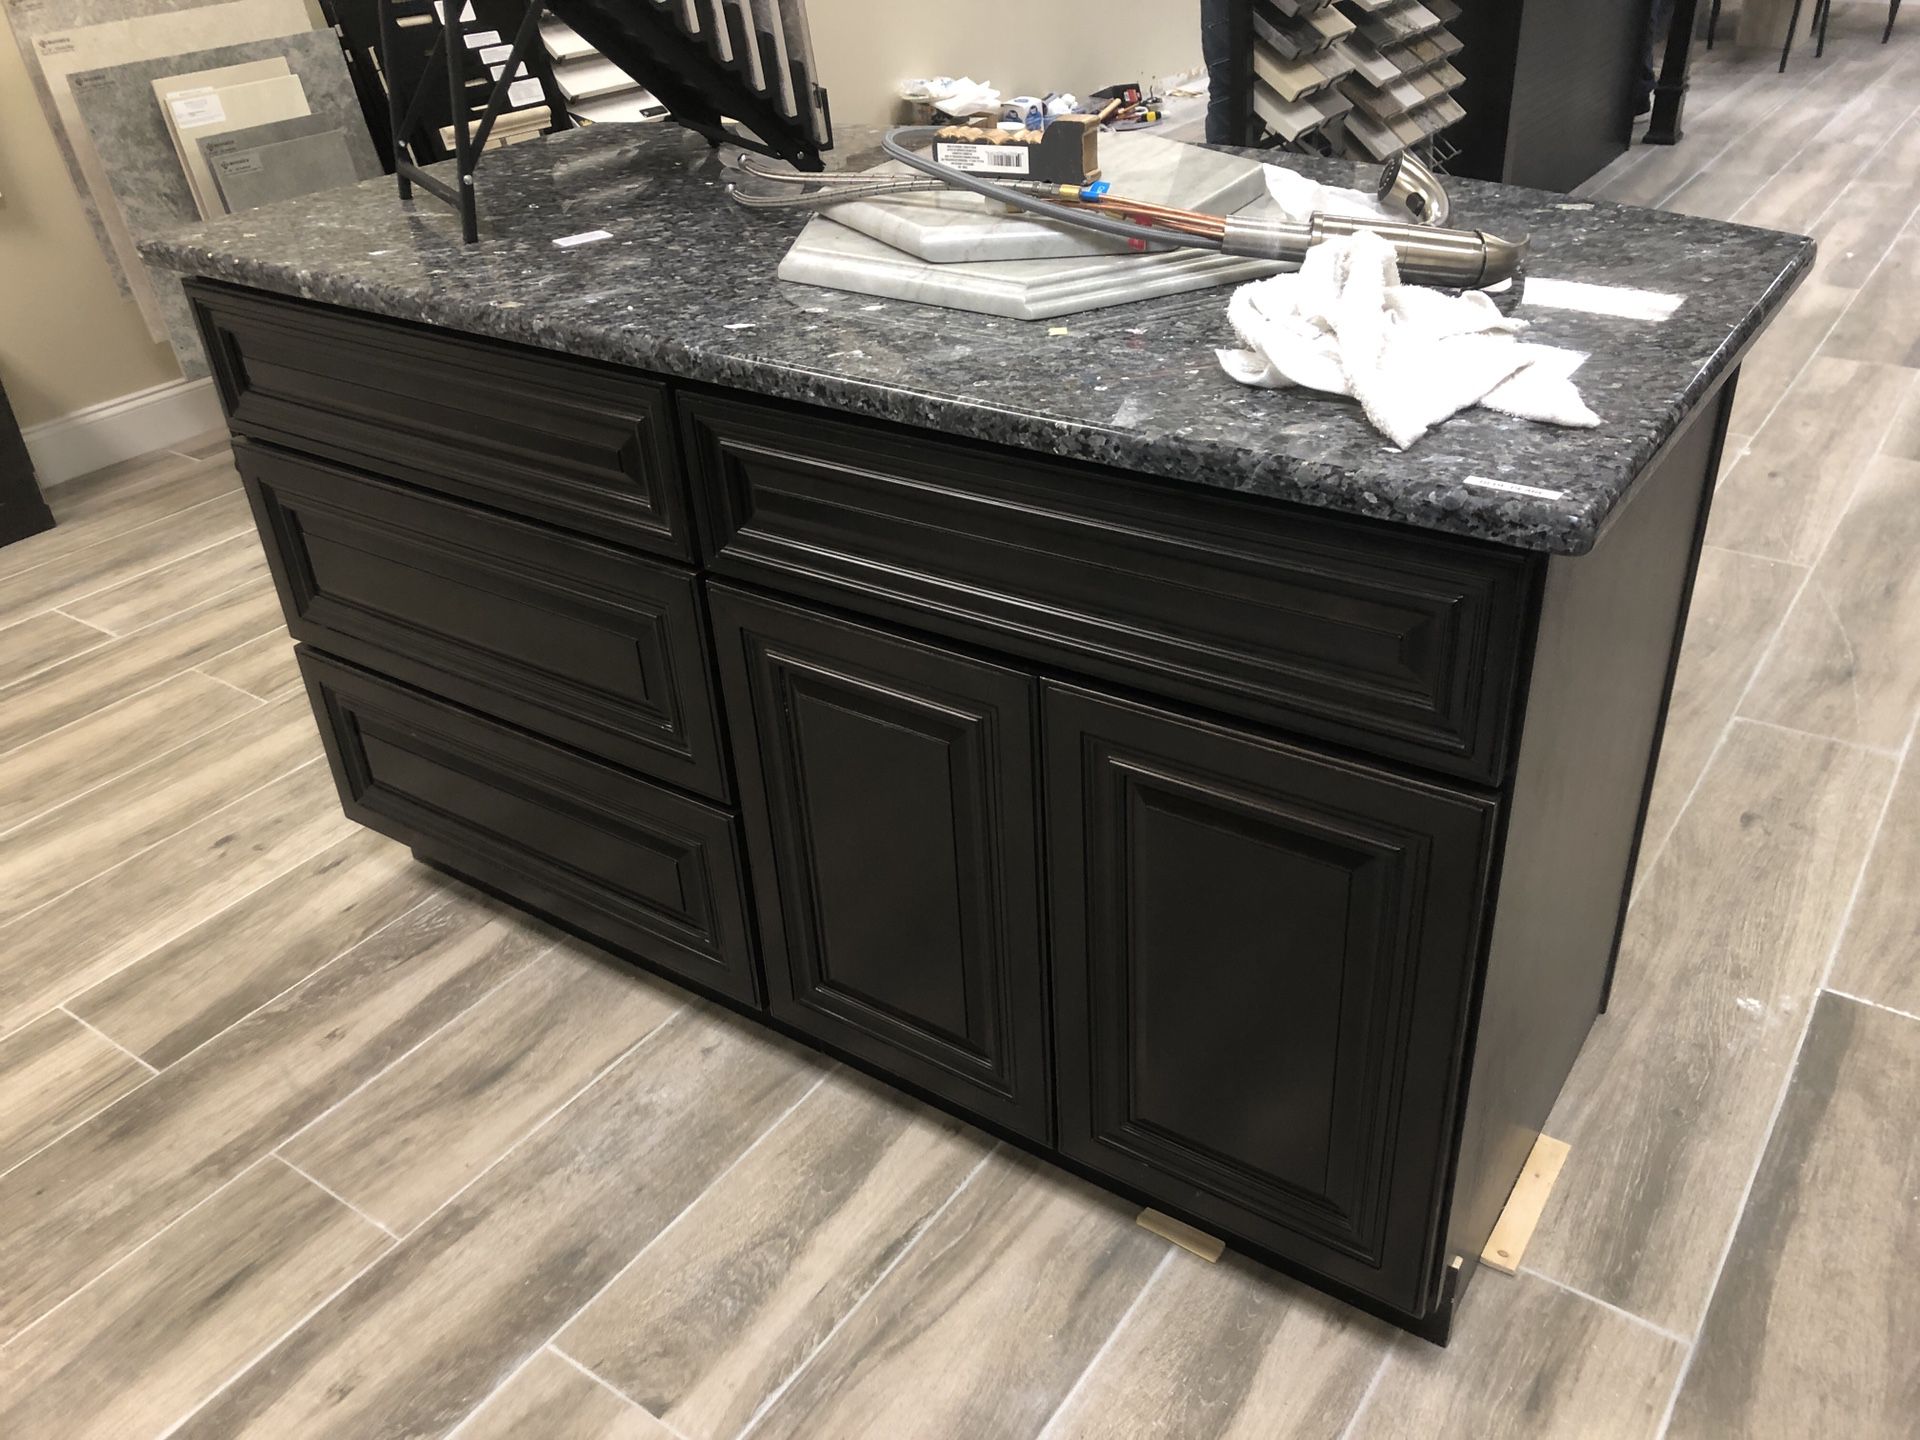 Brand New 60” kitchen island with granite top